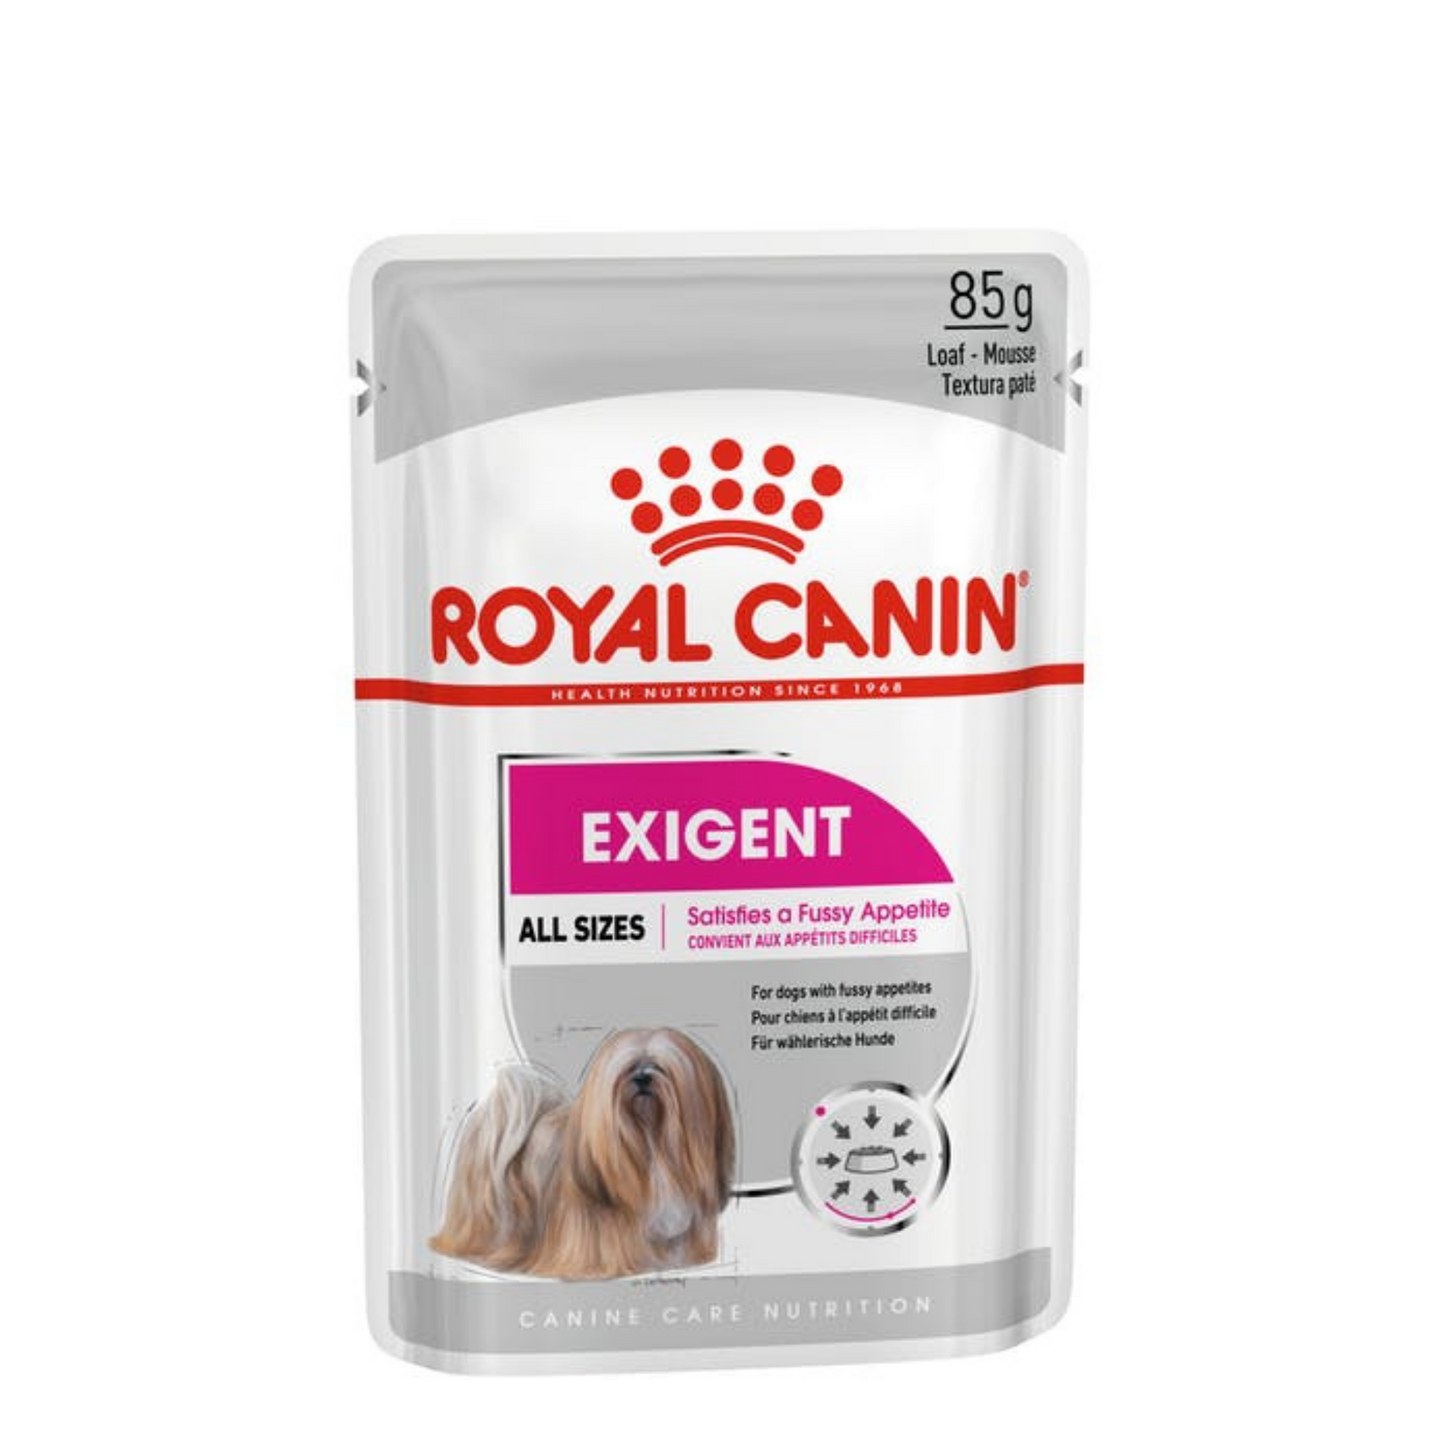 Royal Canin Exigent Wet Food